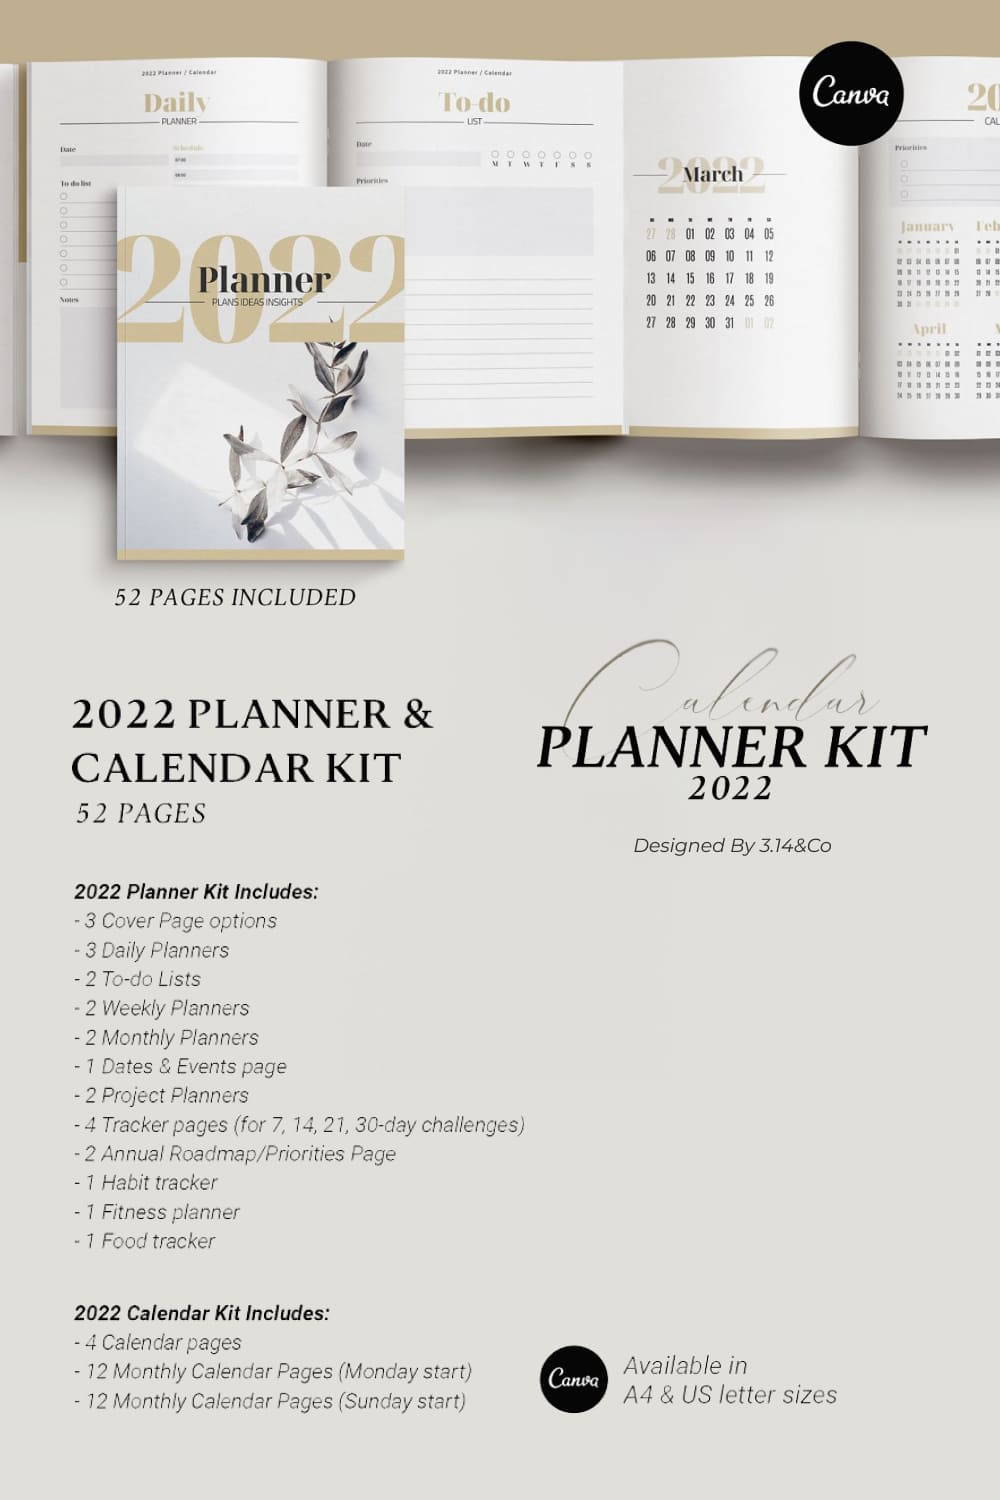 03. canva planner 2022 calendar kit 1000 x 1500